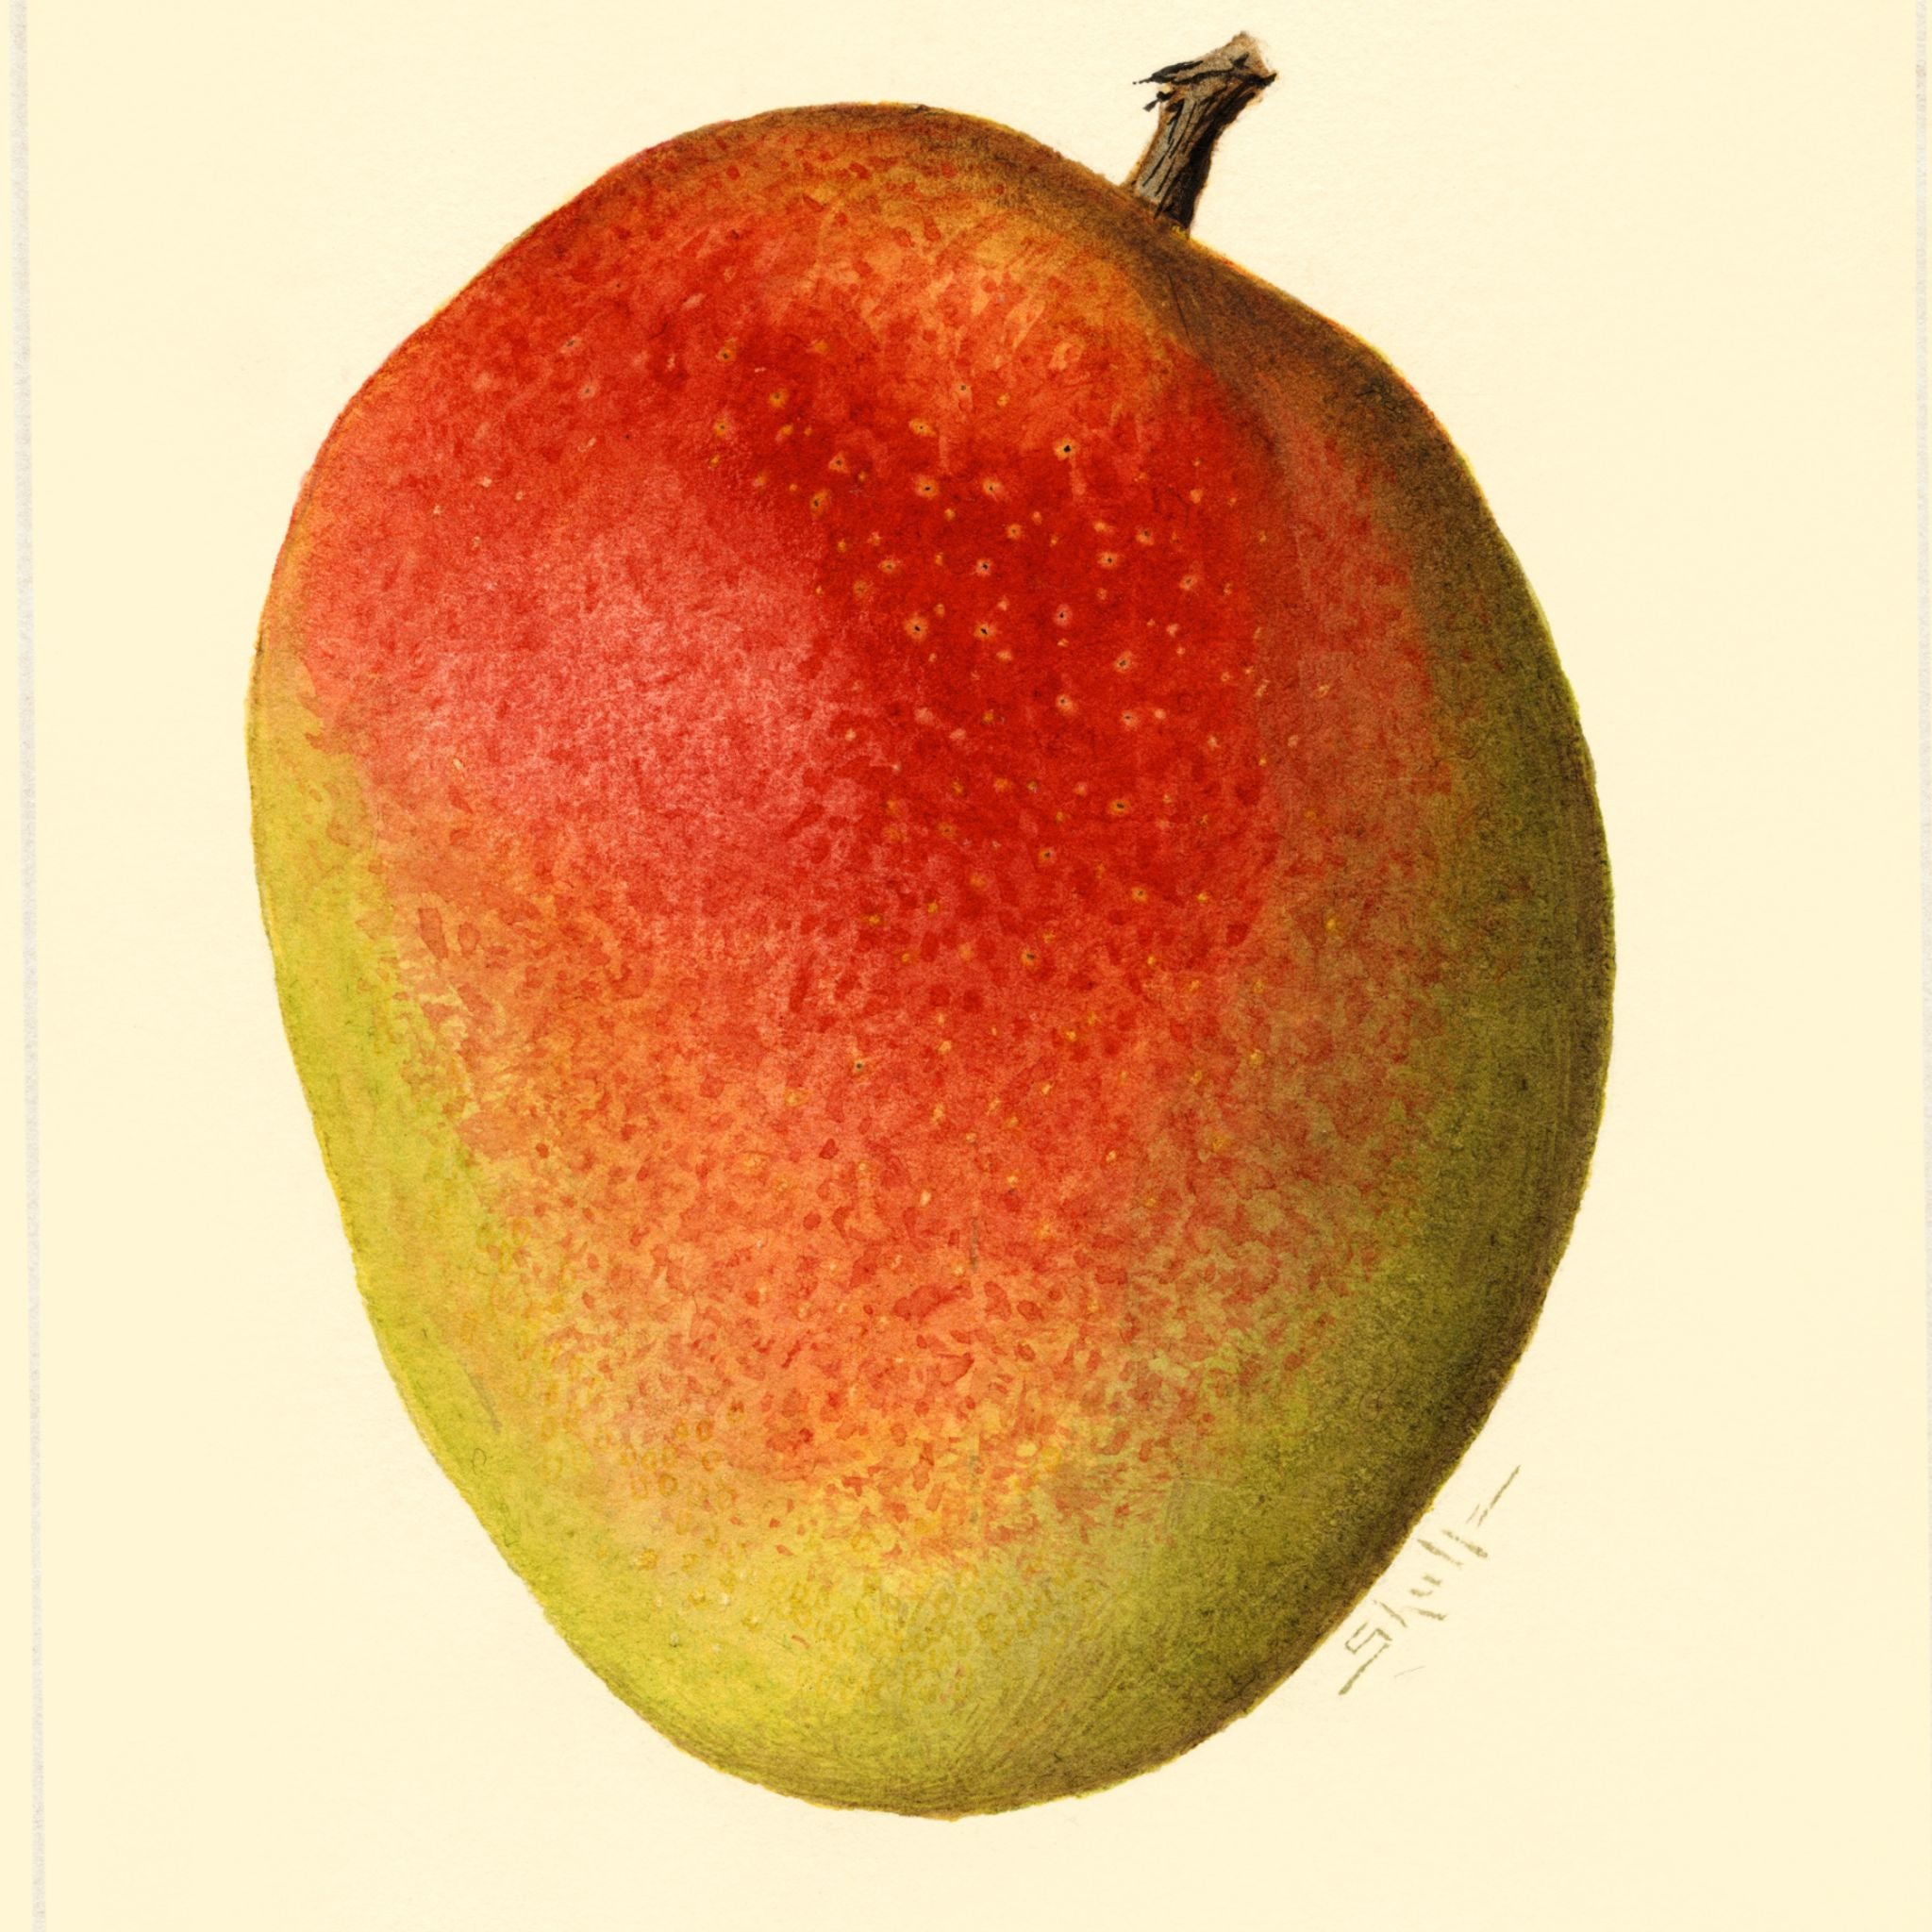 7 Top Mango Fragrances: Discover the Lush and Fruity Aromas